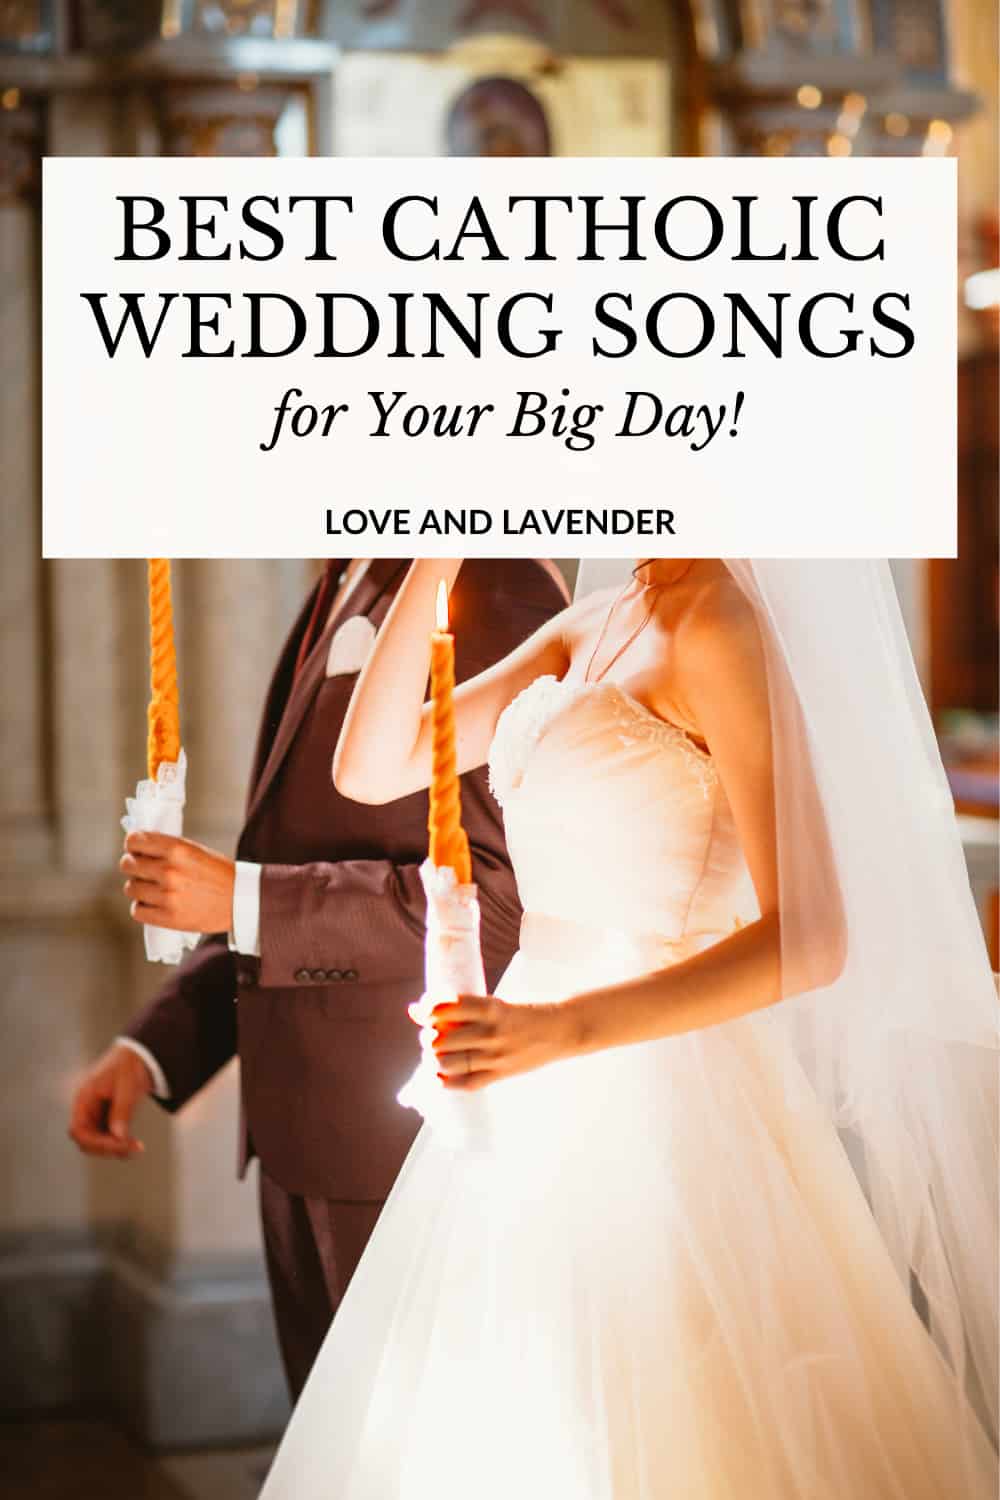 Catholic Wedding Songs - Pinterest pin